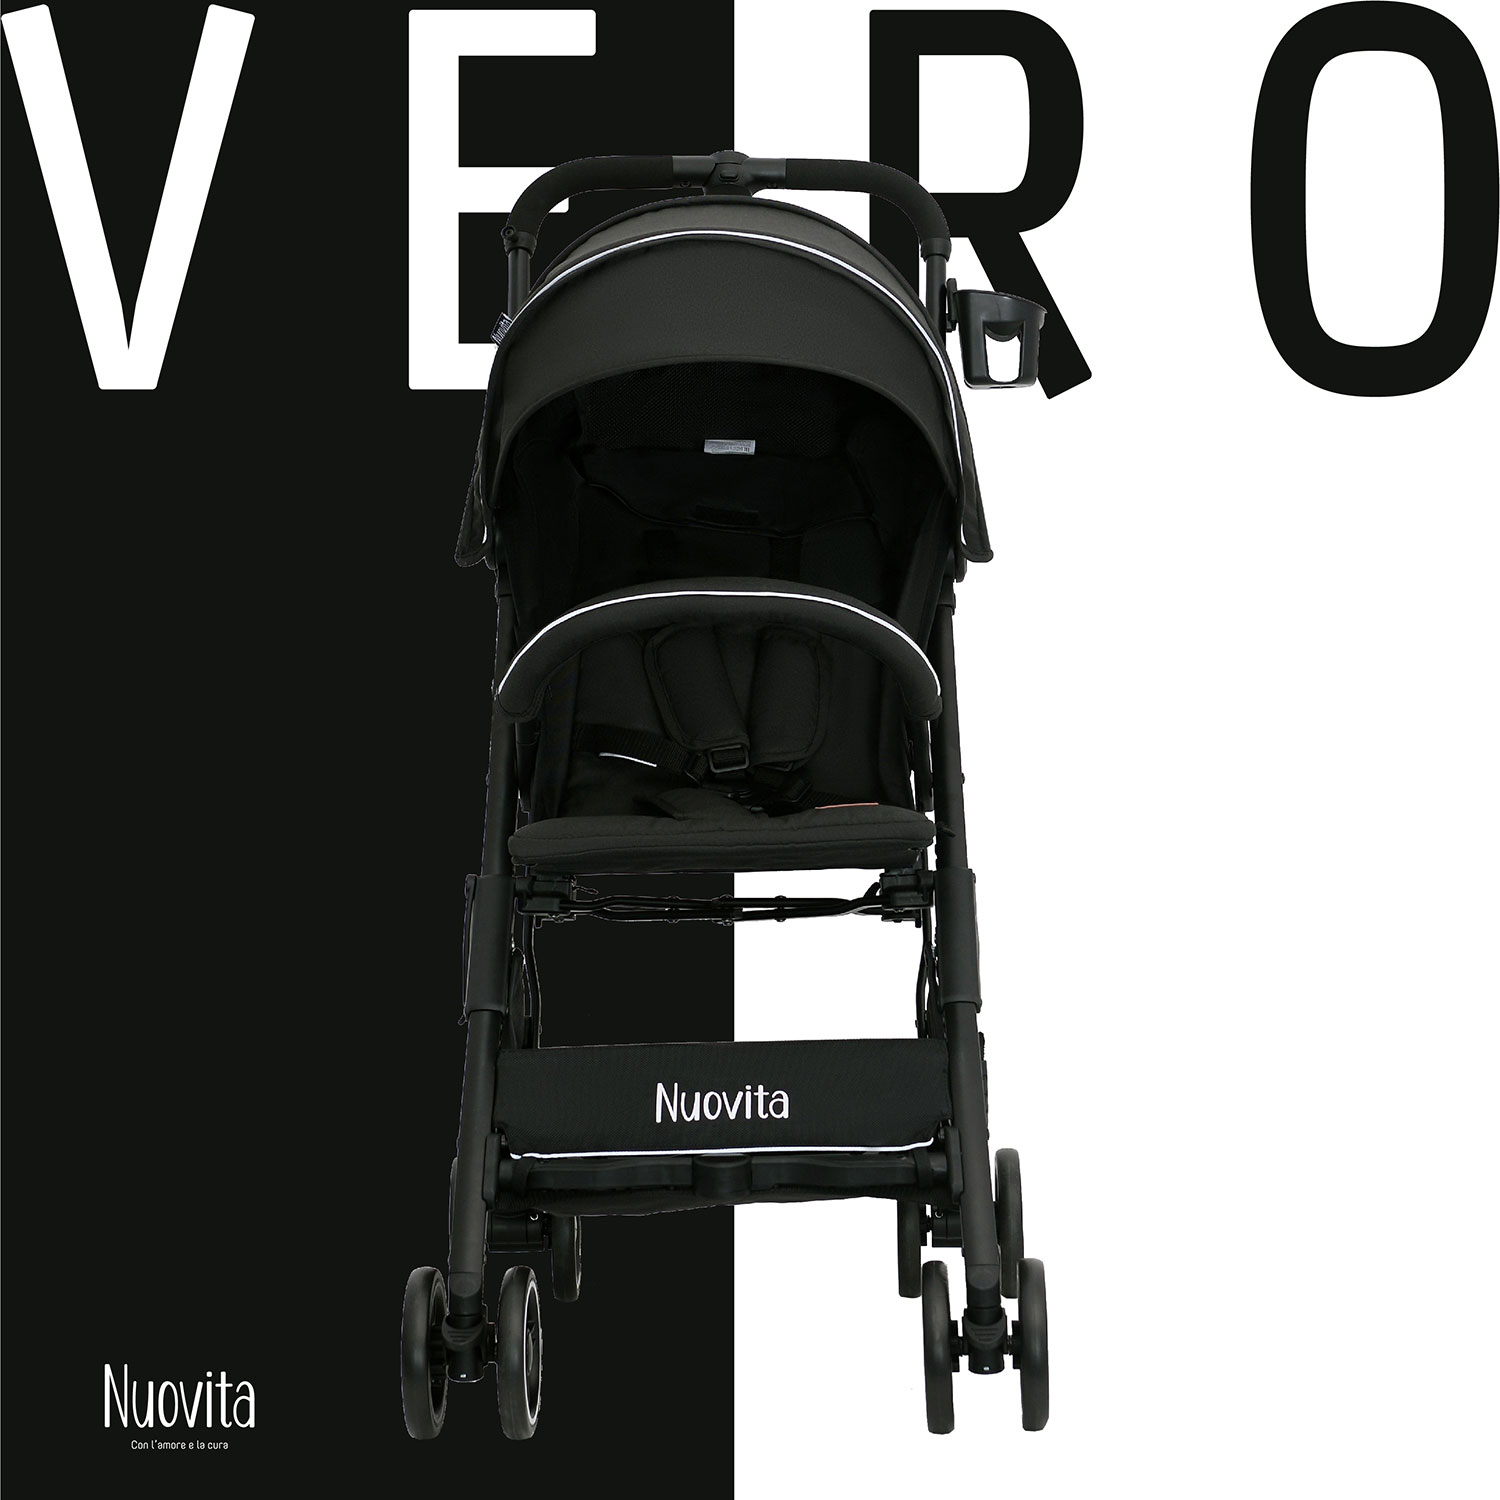 Прогулочная коляска Nuovita Vero Nero Черный прогулочная коляска nuovita vero arancio оранжевый